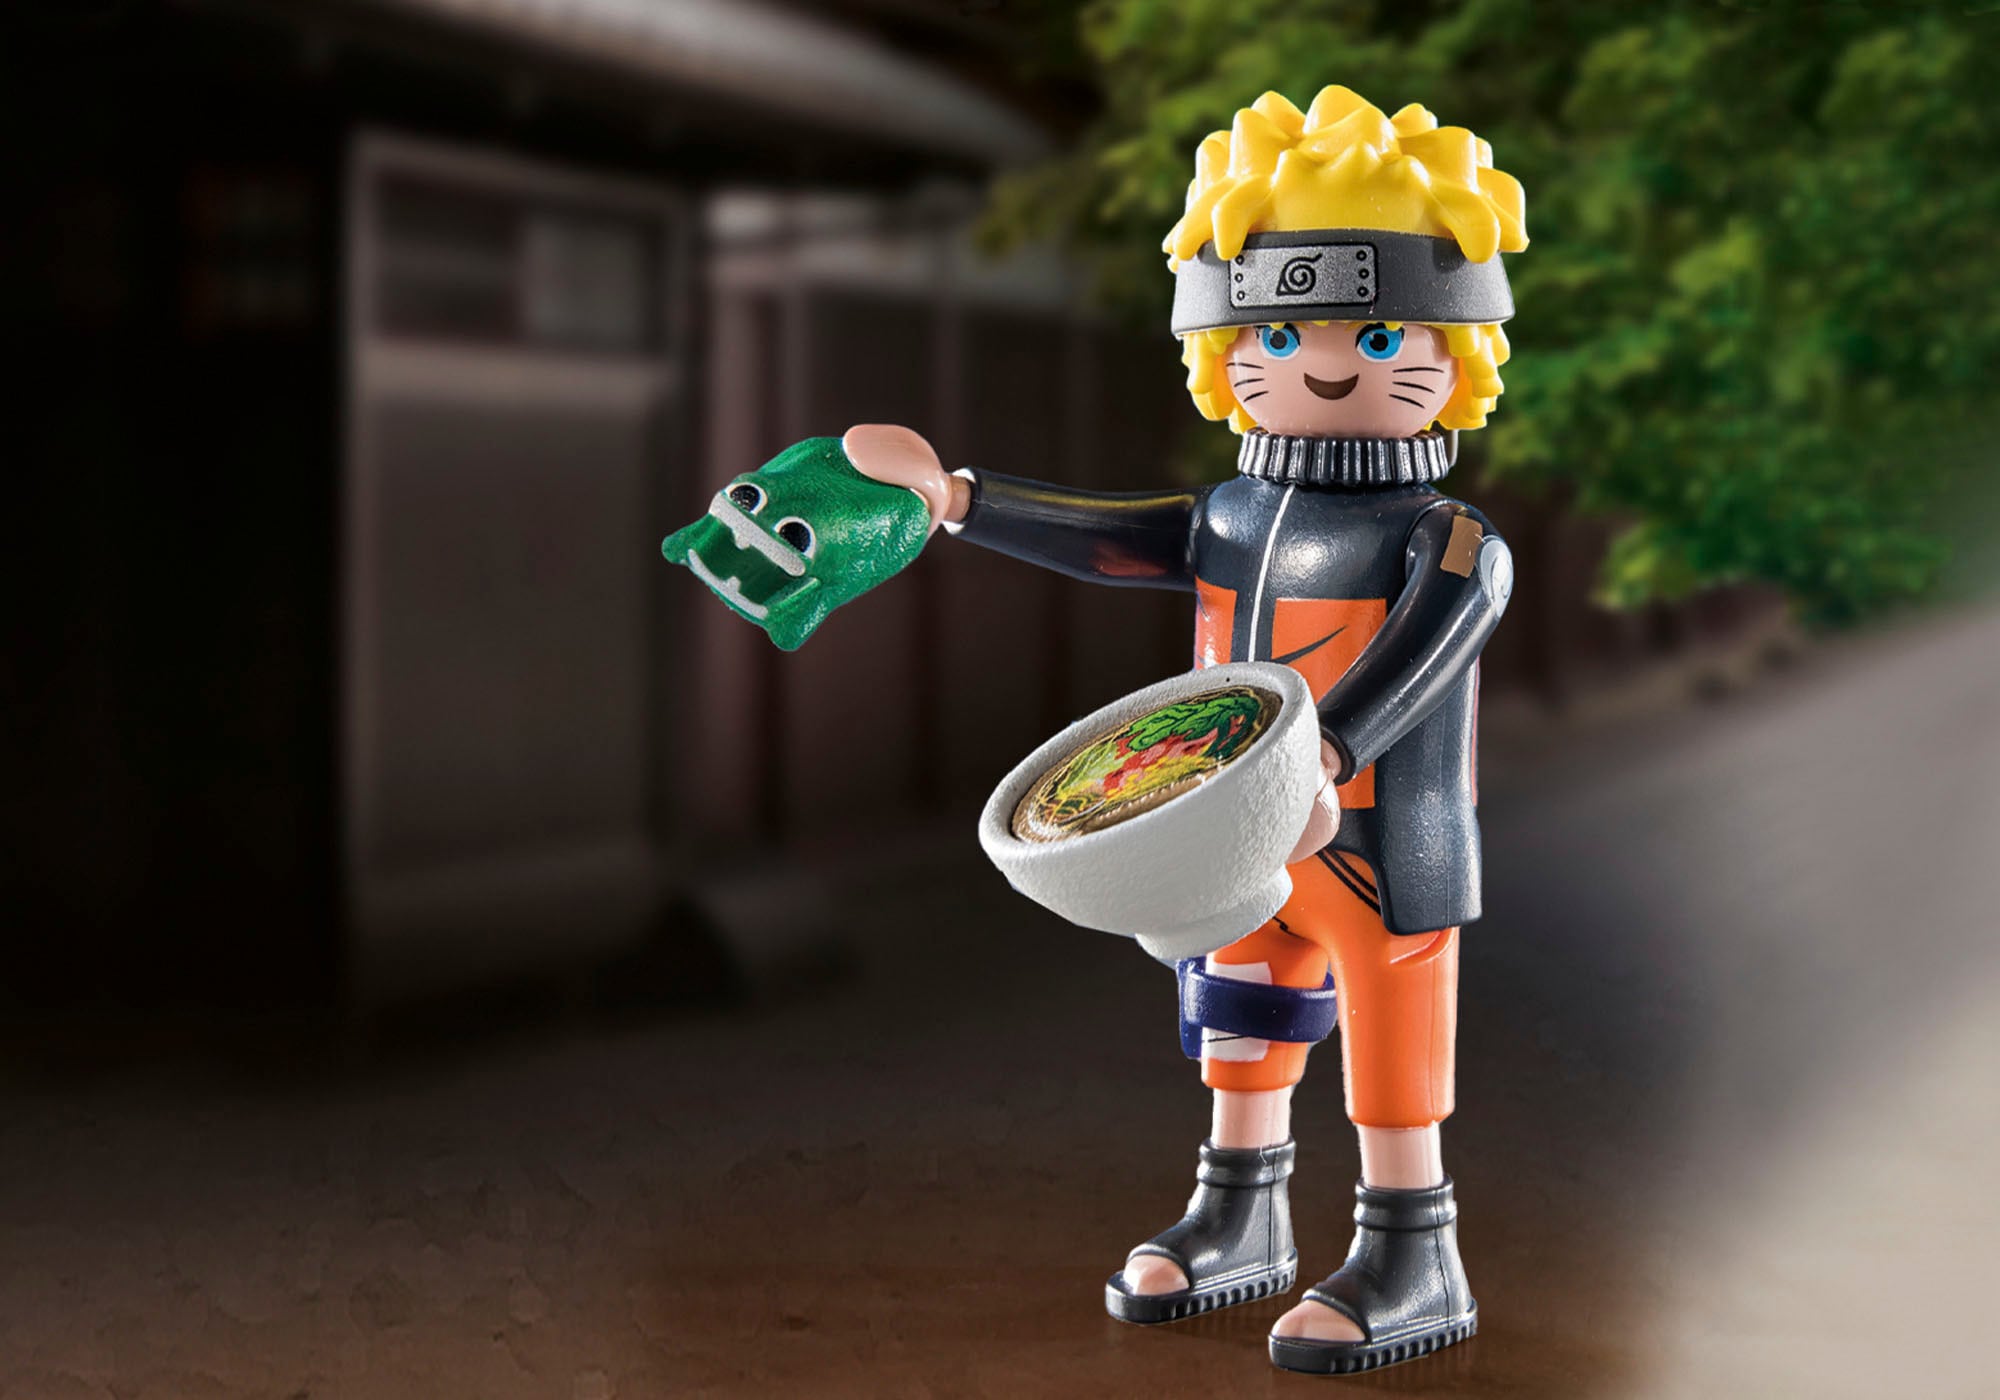 Playmobil® Konstruktions-Spielset »Ichiraku Ramen Shop (70668), Naruto«, (105 St.)